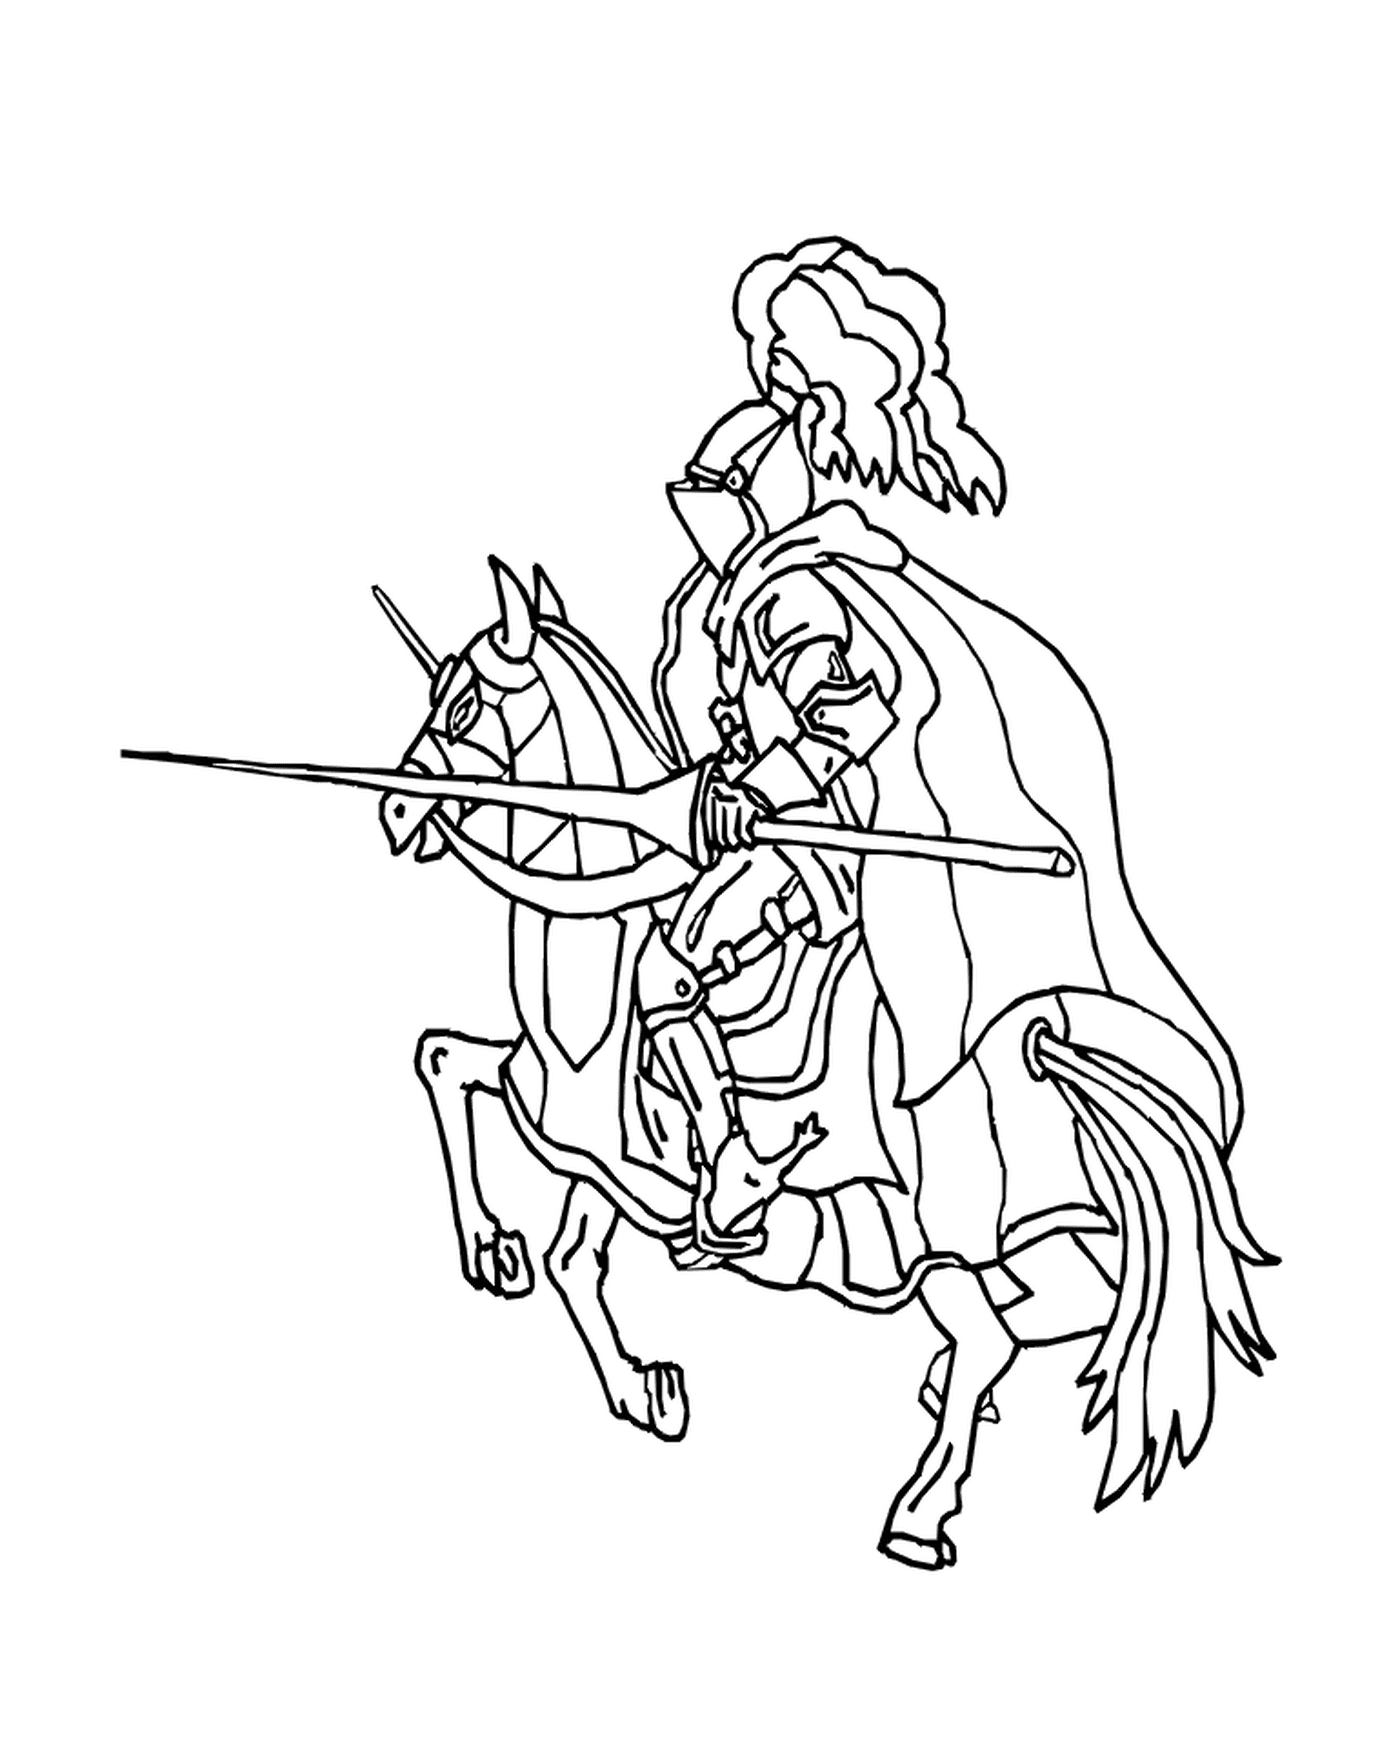  A horseman holding a spear 